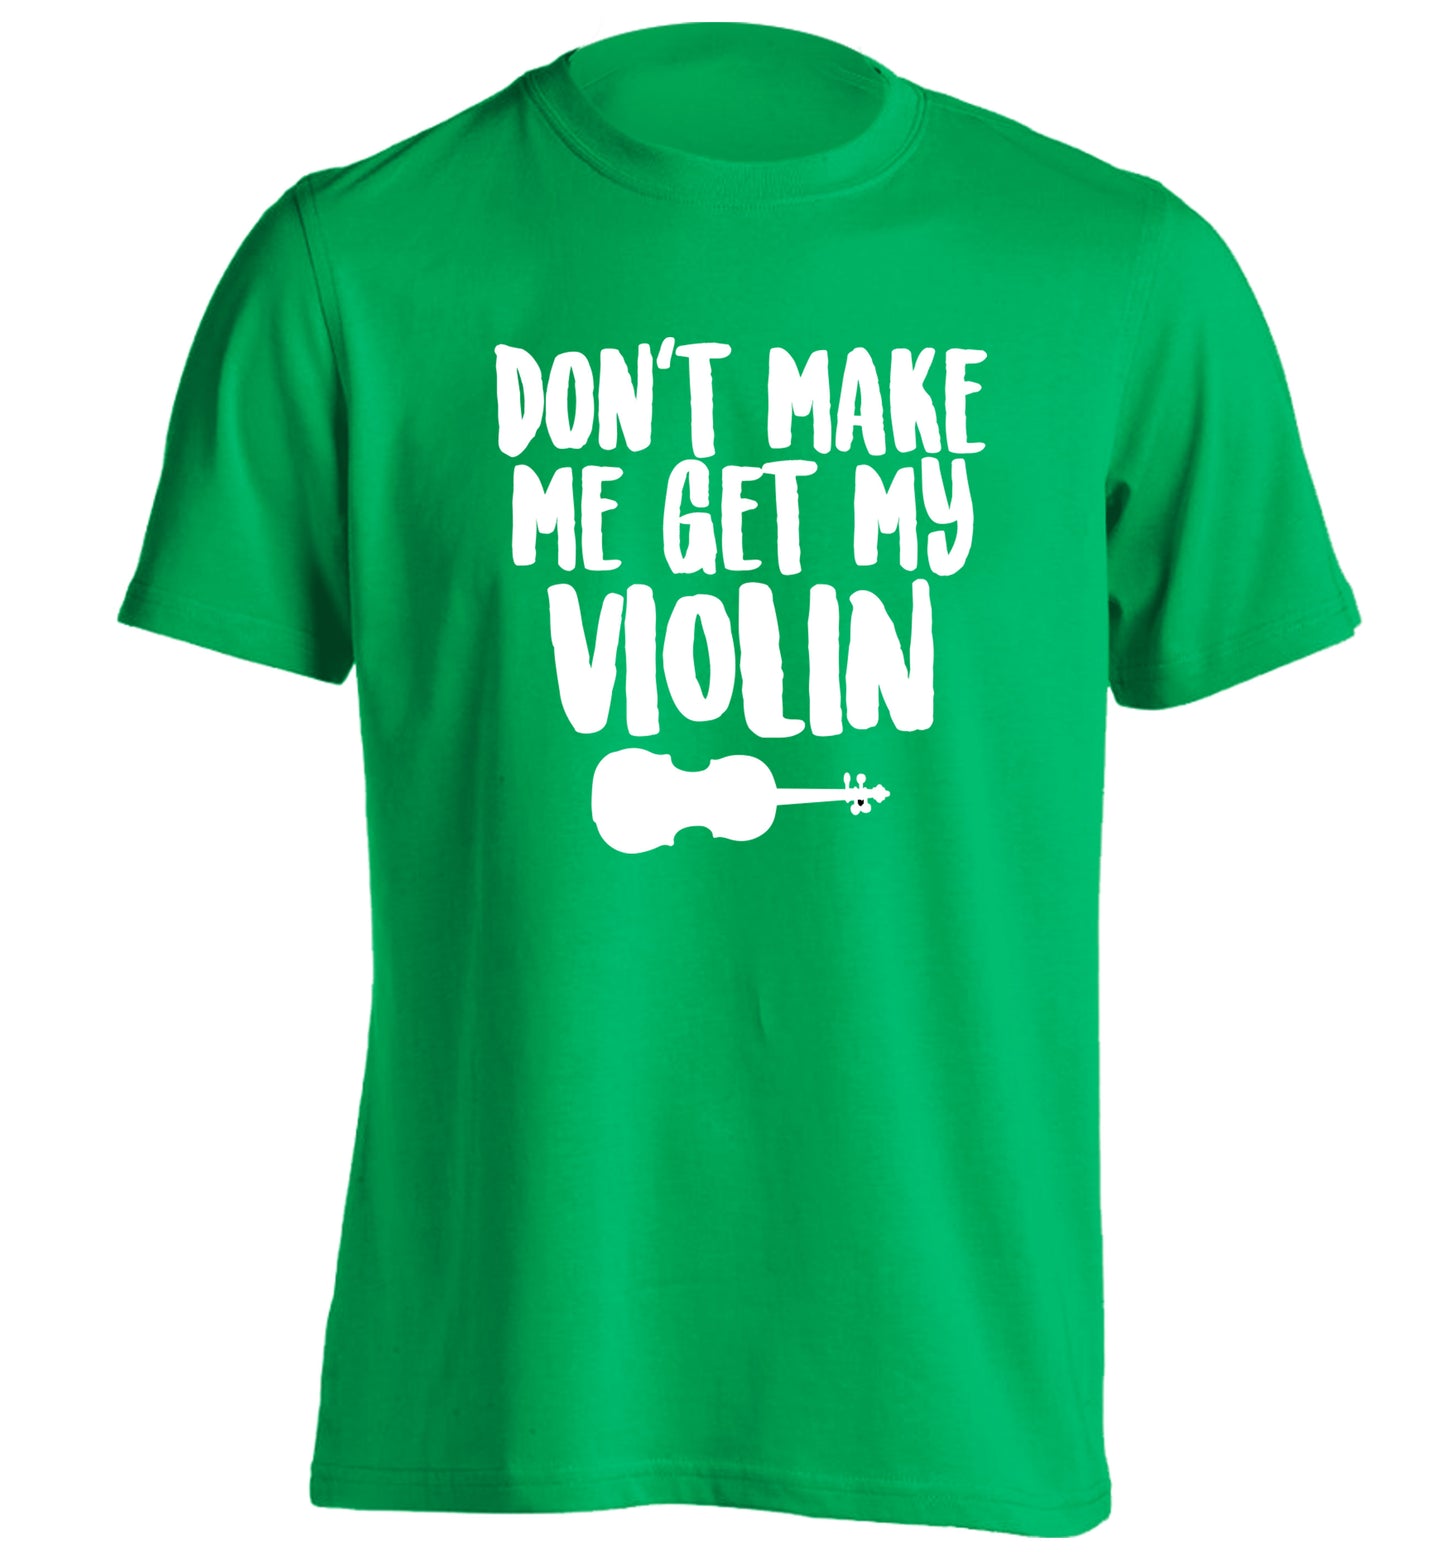 Don't make me get my violin adults unisex green Tshirt 2XL